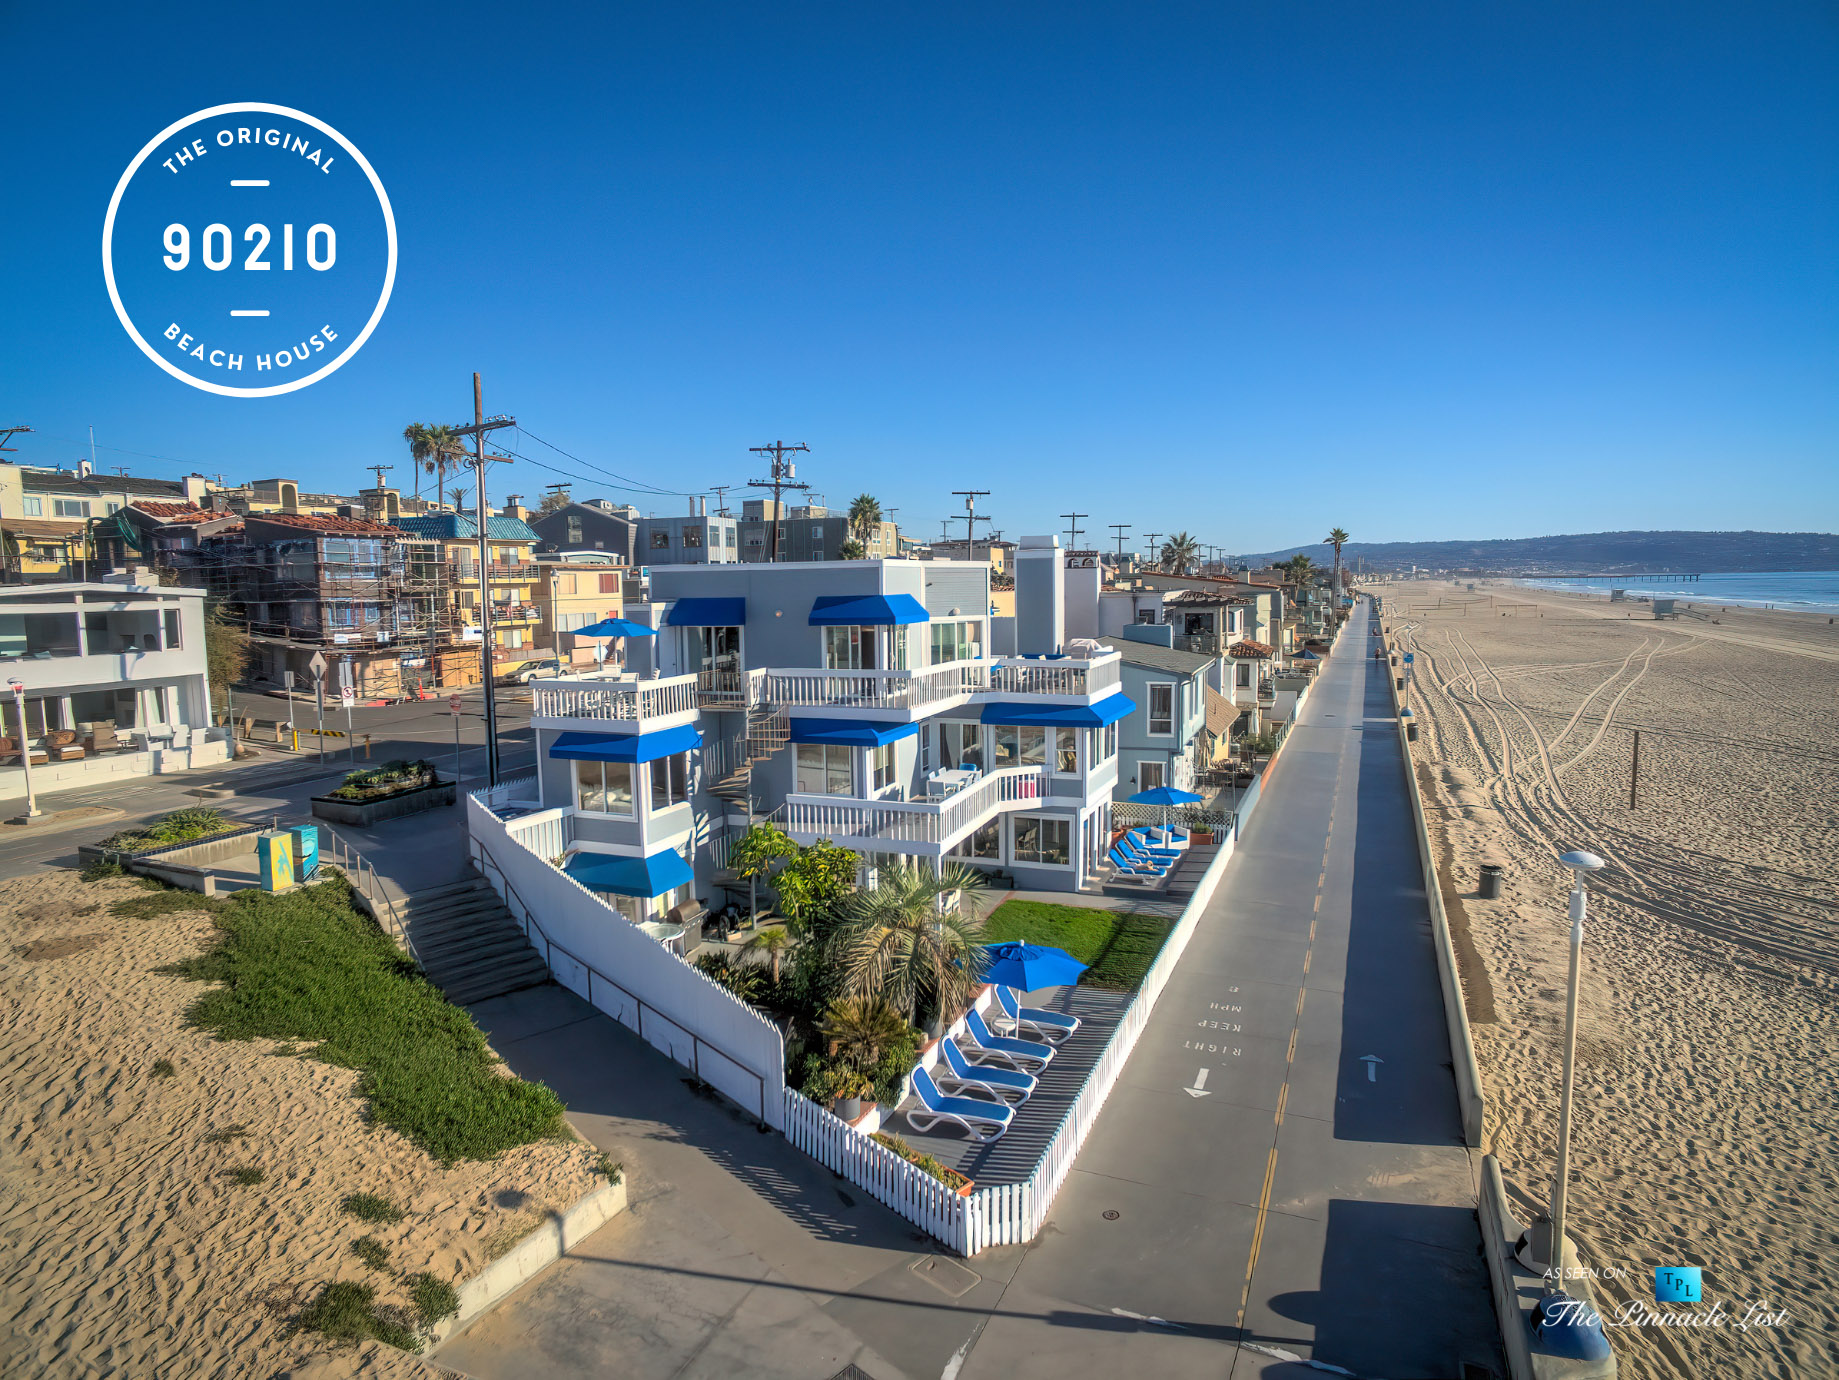 The Original 90210 Beach House - 3500 The Strand, Hermosa Beach, CA, USA - The Strand Aerial View